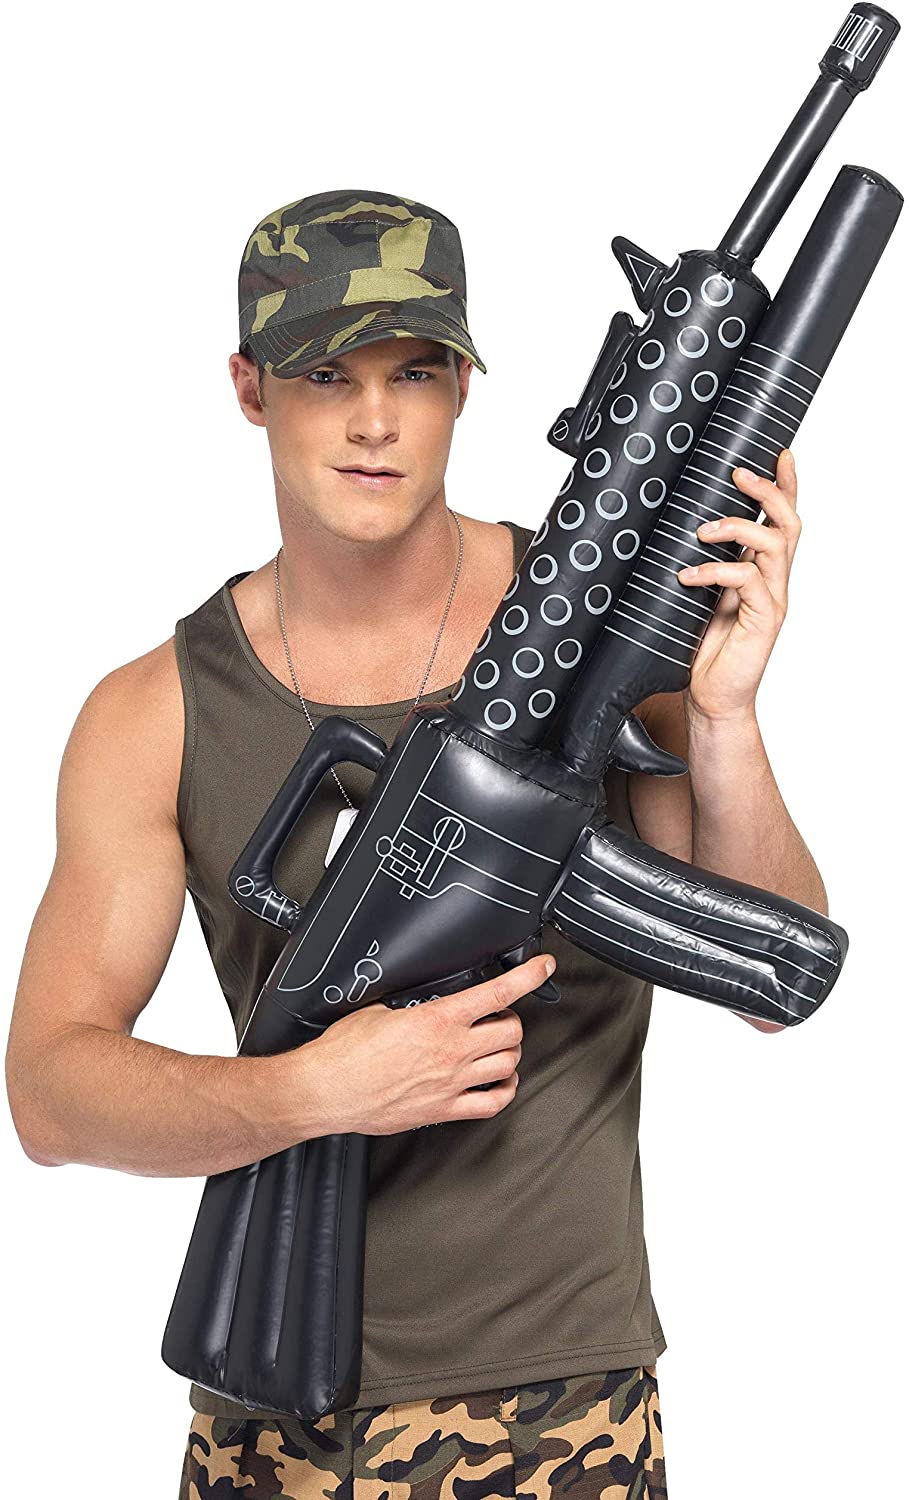 Smiffys 44-inch Machine Gun Inflatable - Large